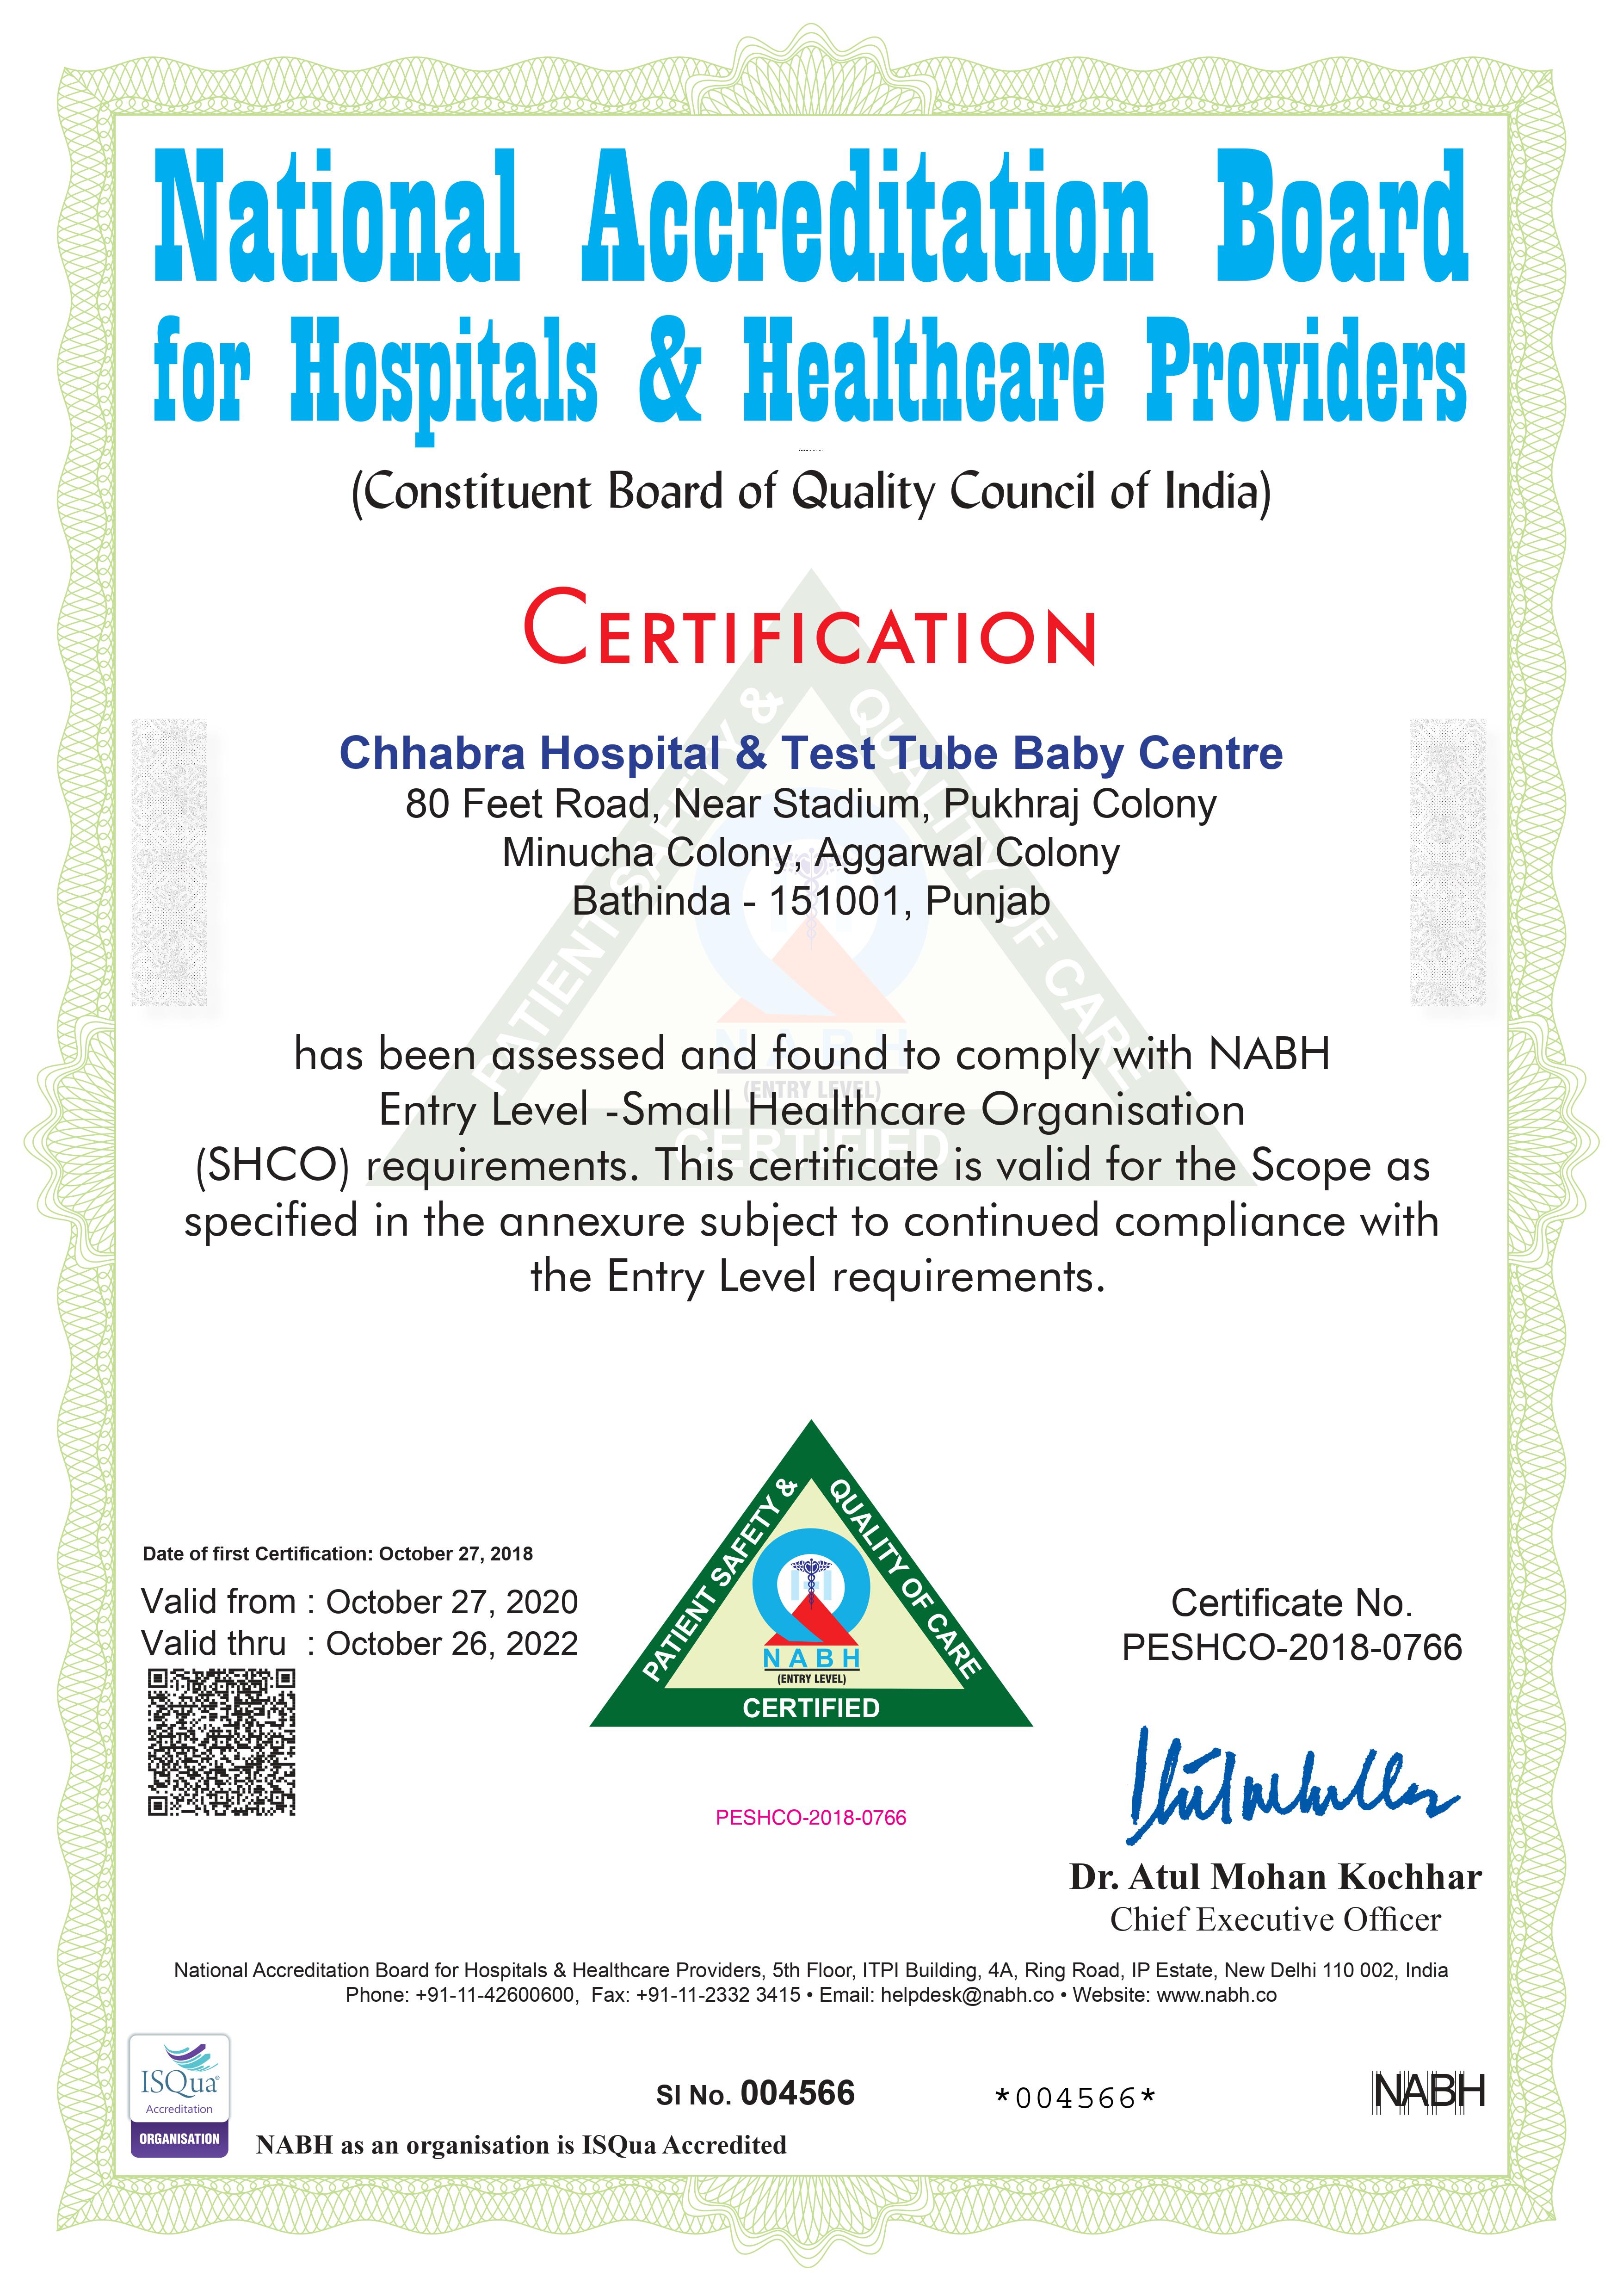 recognization of chhabra hospital